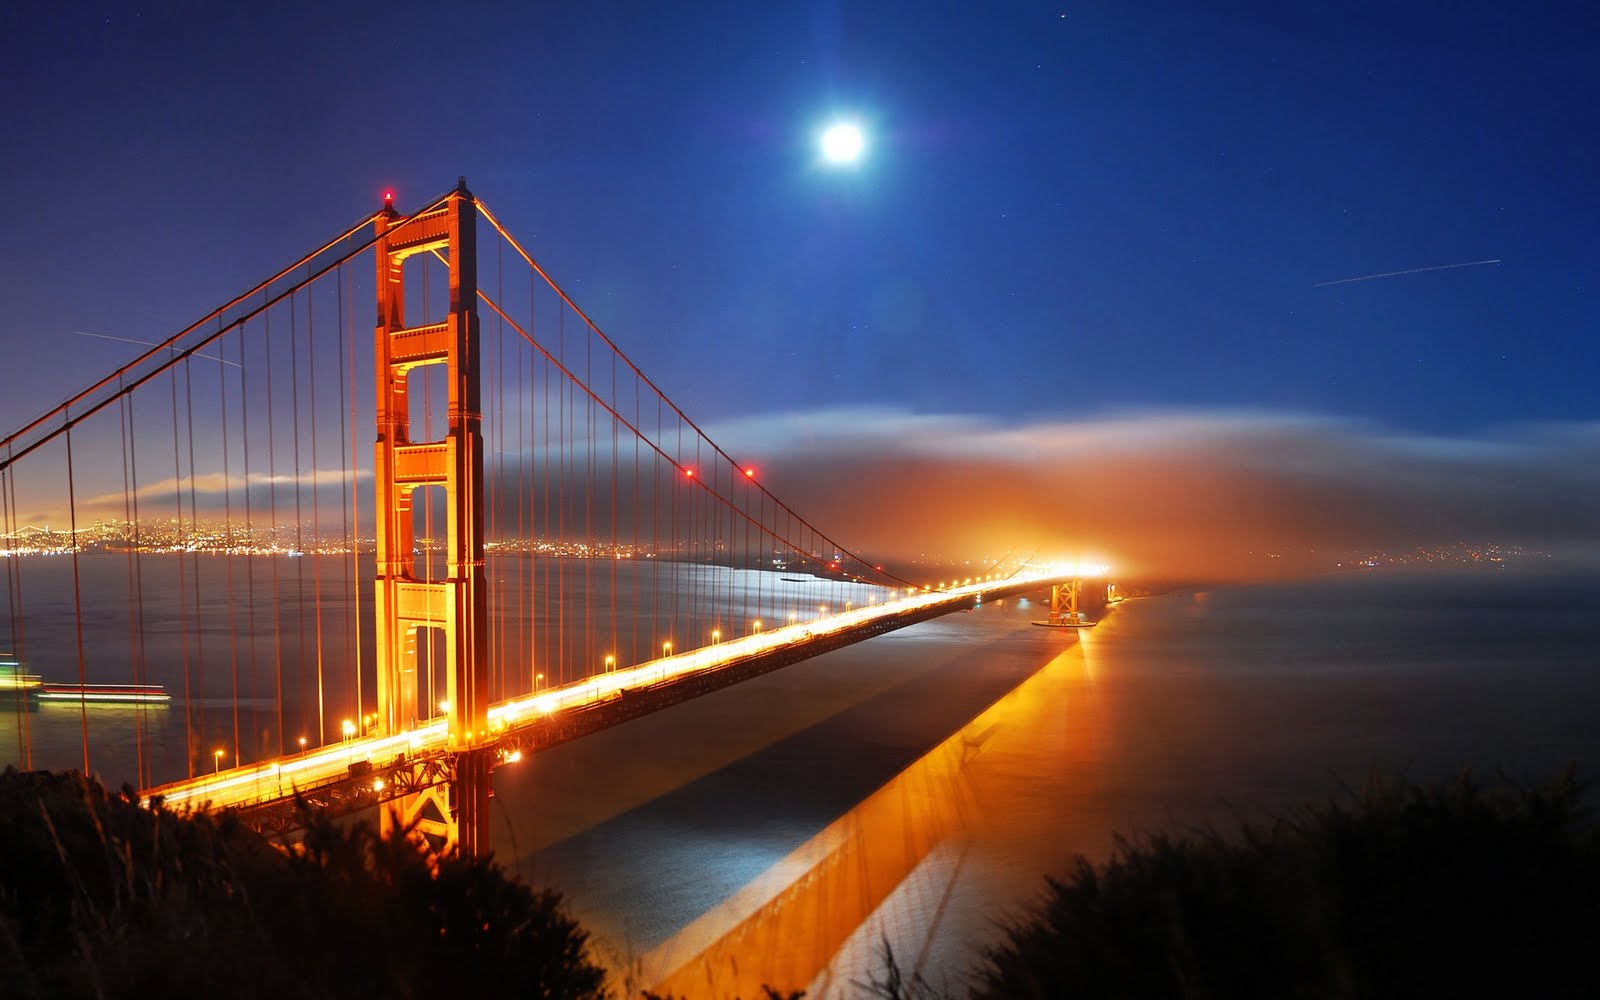 Oby16 100% Quality Hd Popular Wallpaper - Golden Gate Bridge - HD Wallpaper 